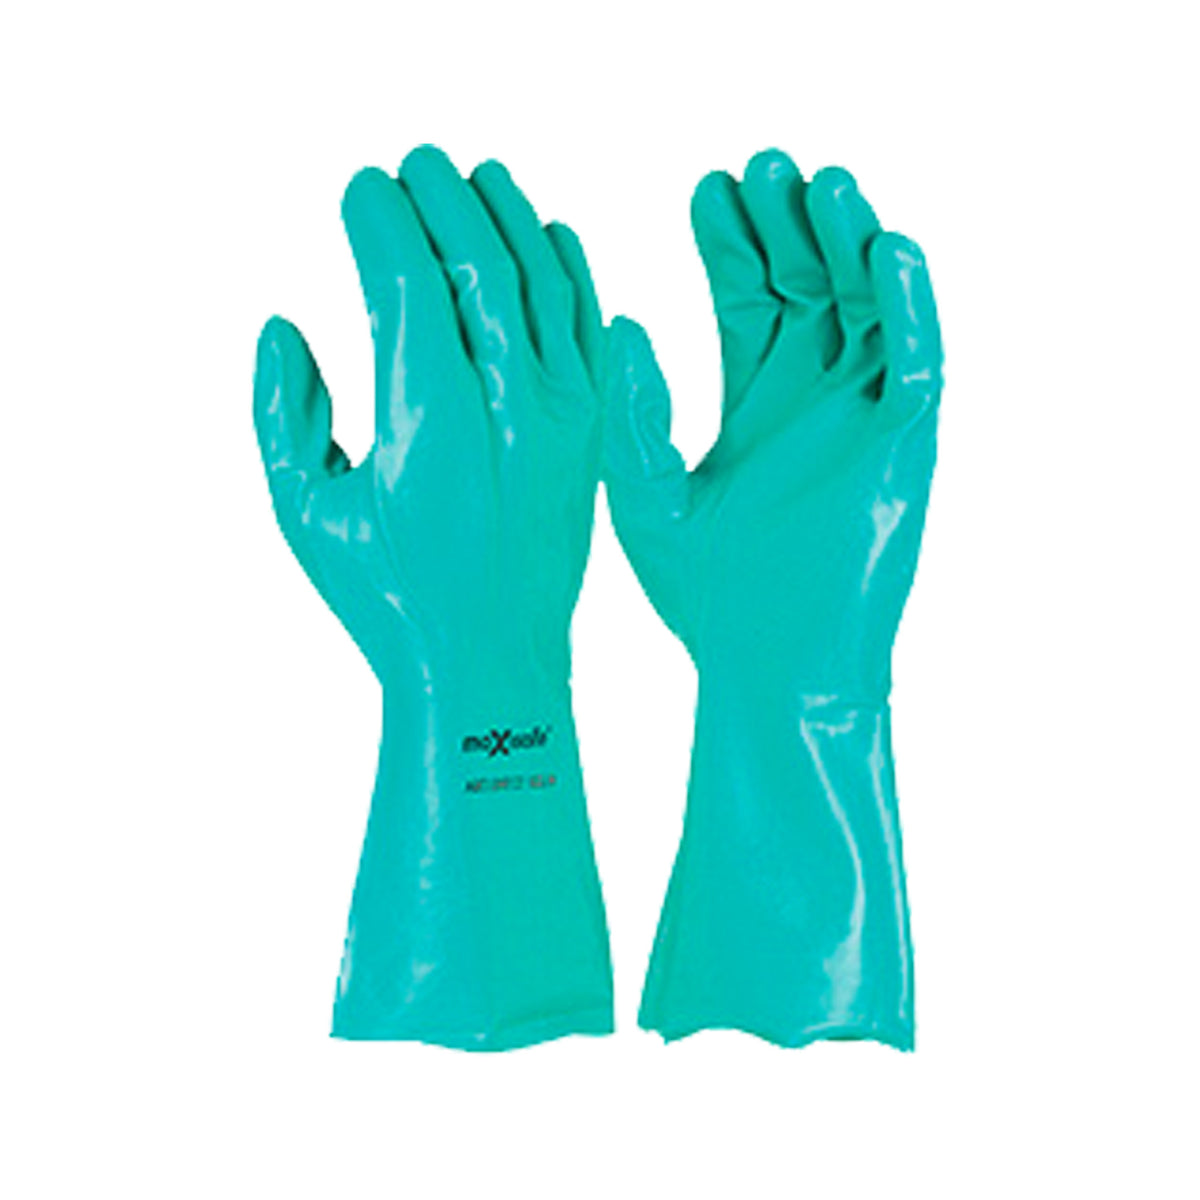 green nitrile chemical glove in size 33cm